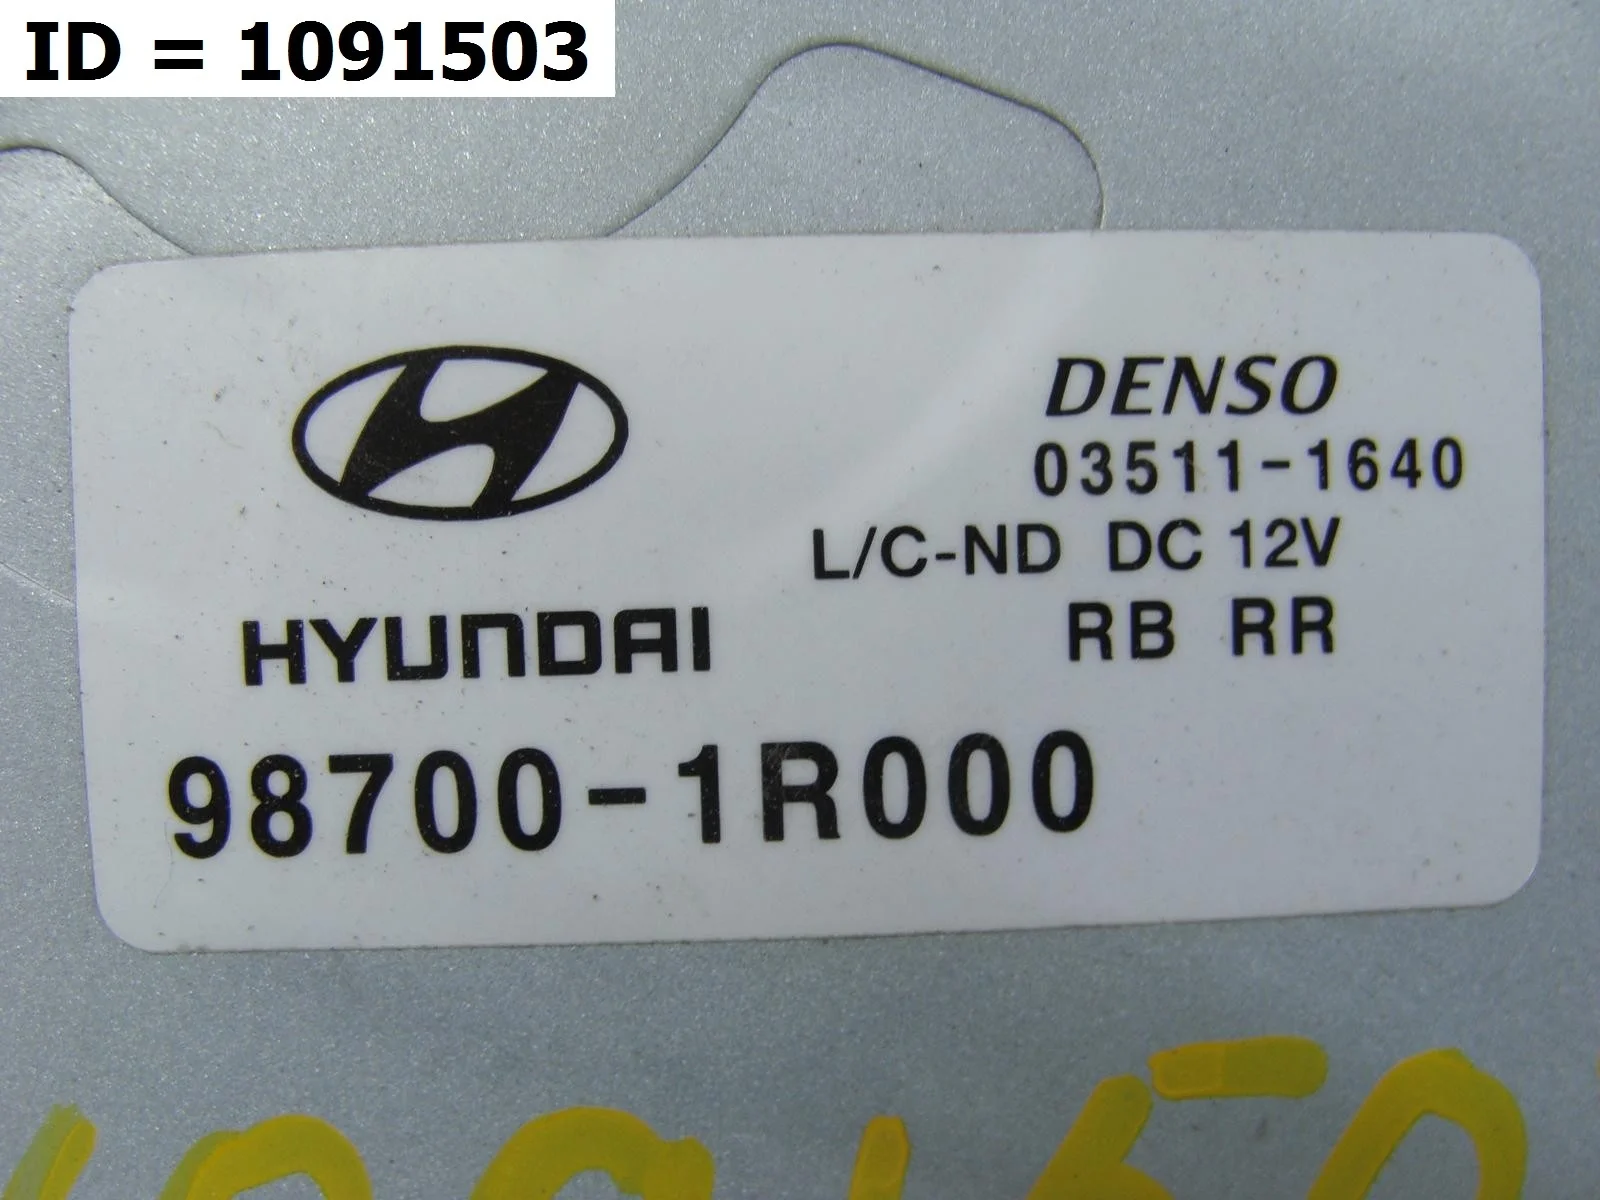 моторчик заднего дворника задний Hyundai SOLARIS 1  RB  Задний  987001R000 2010-2017 (контрактная запчасть)